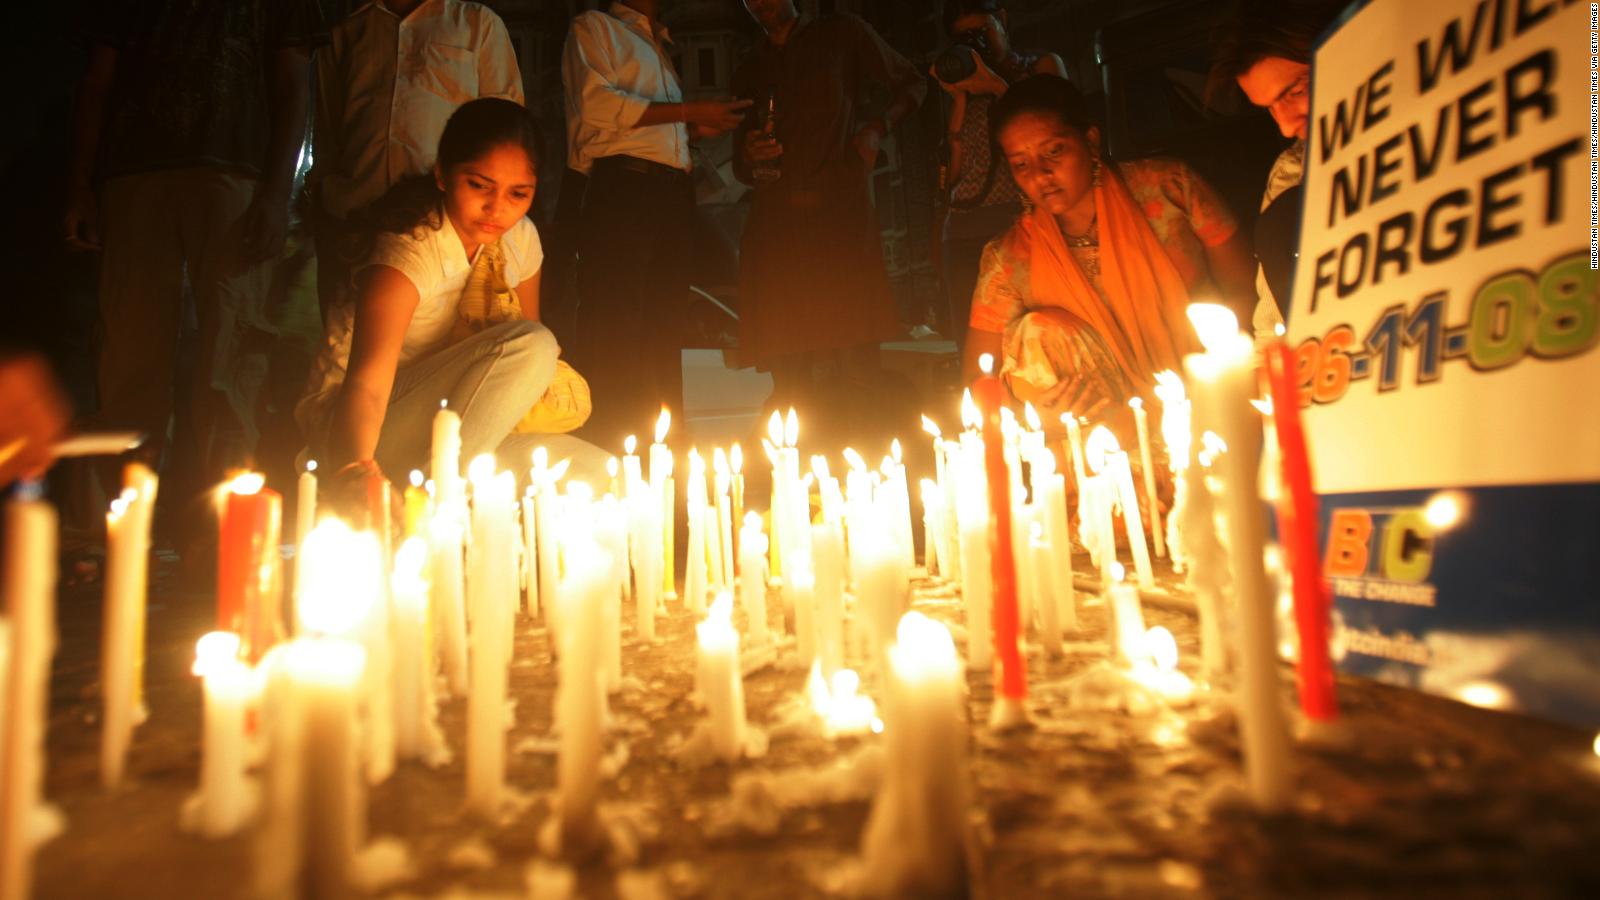 26/11 Mumbai attacks: 10 years on survivors share their stories - CNN